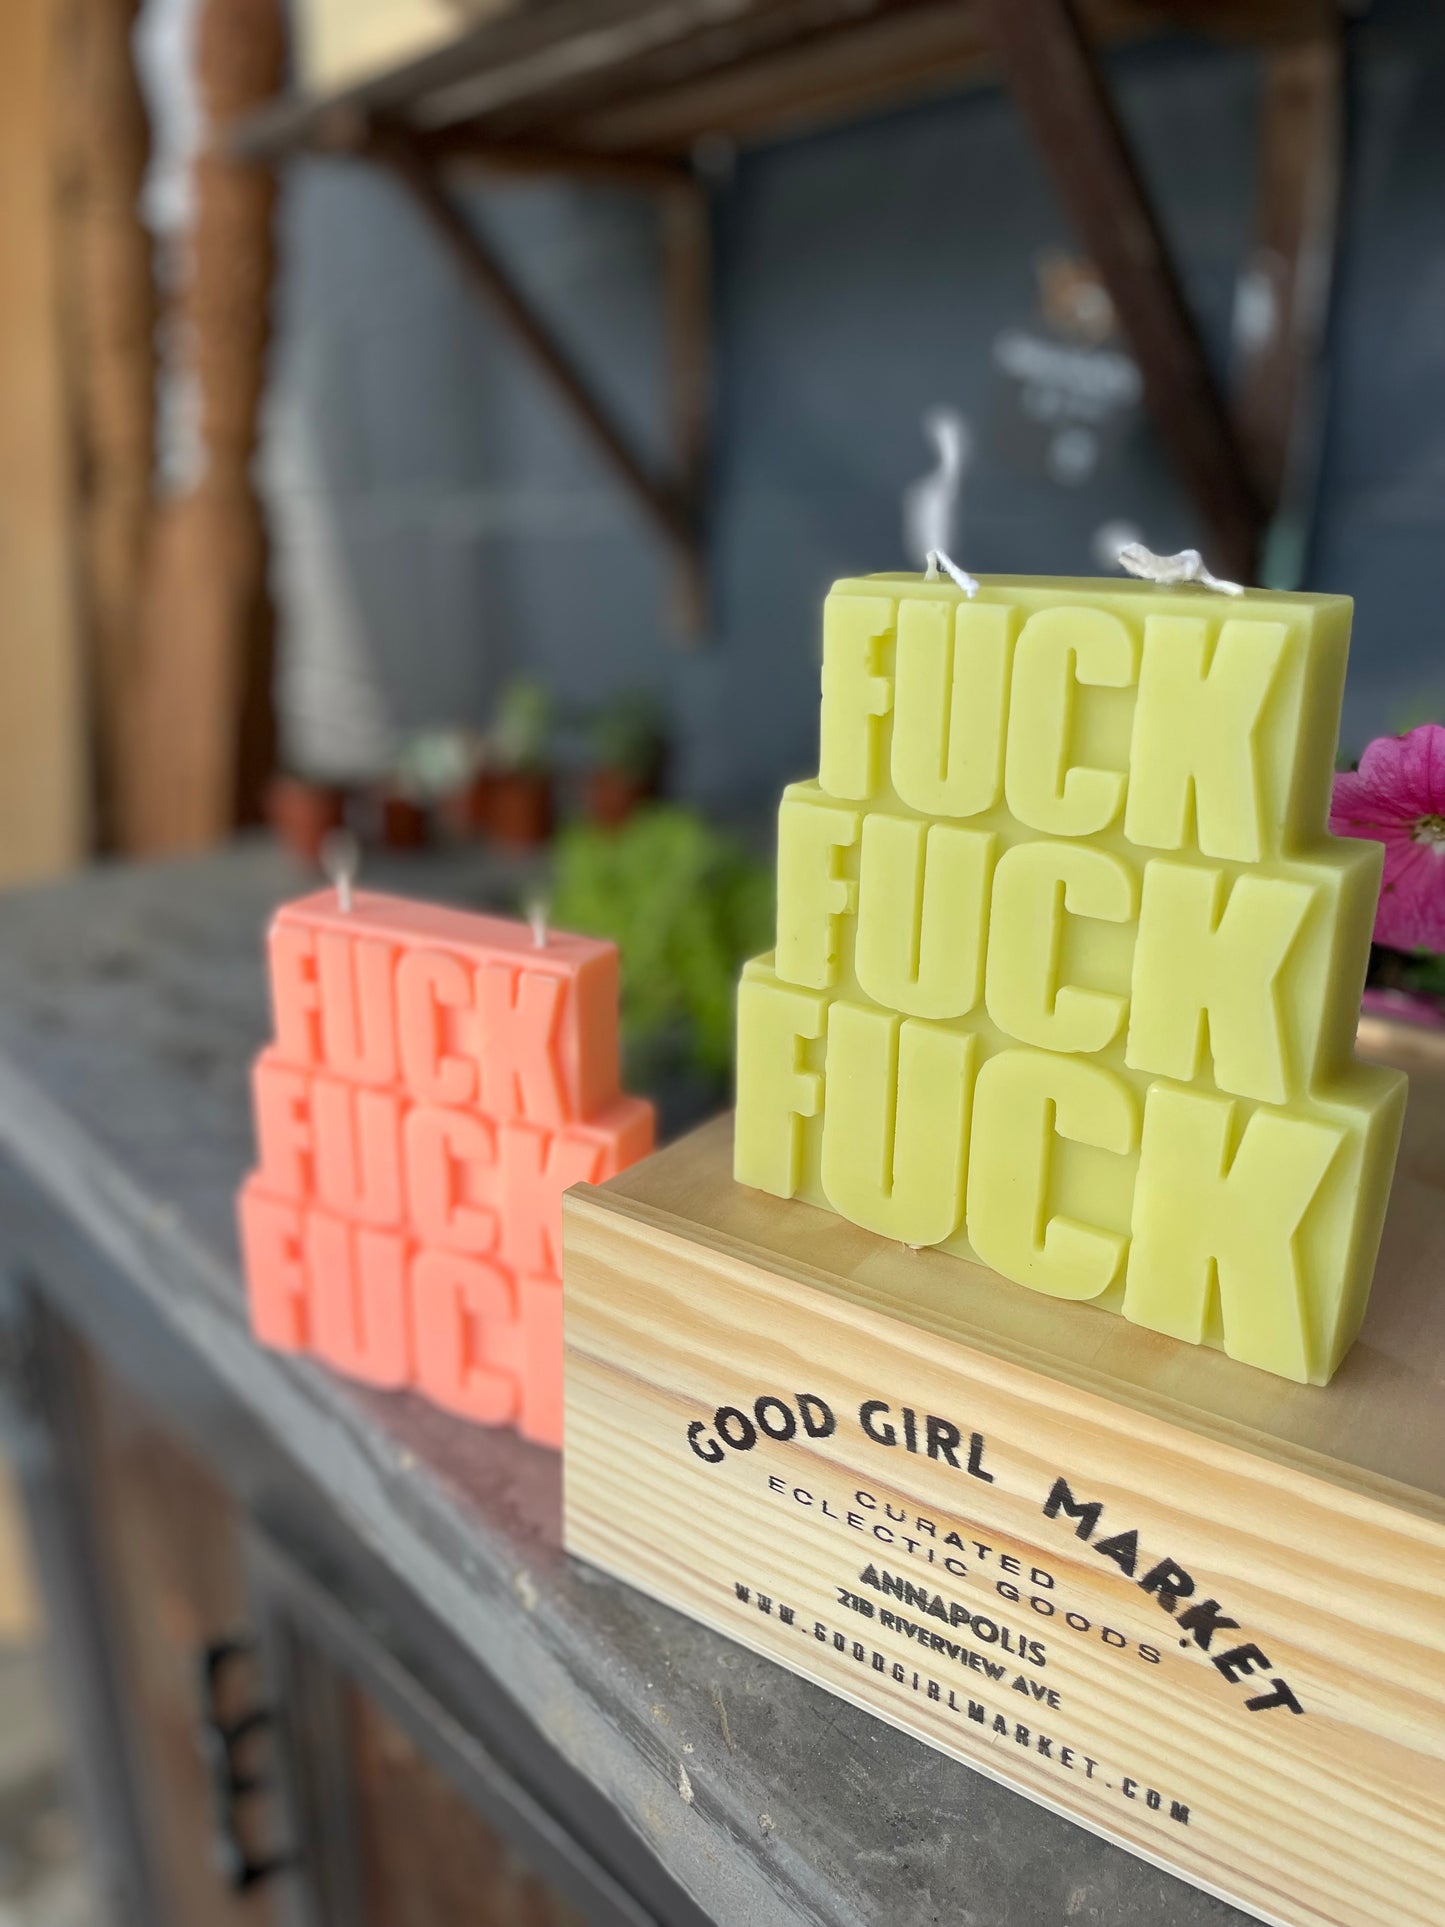 Good Girl Market “F…K” Candle